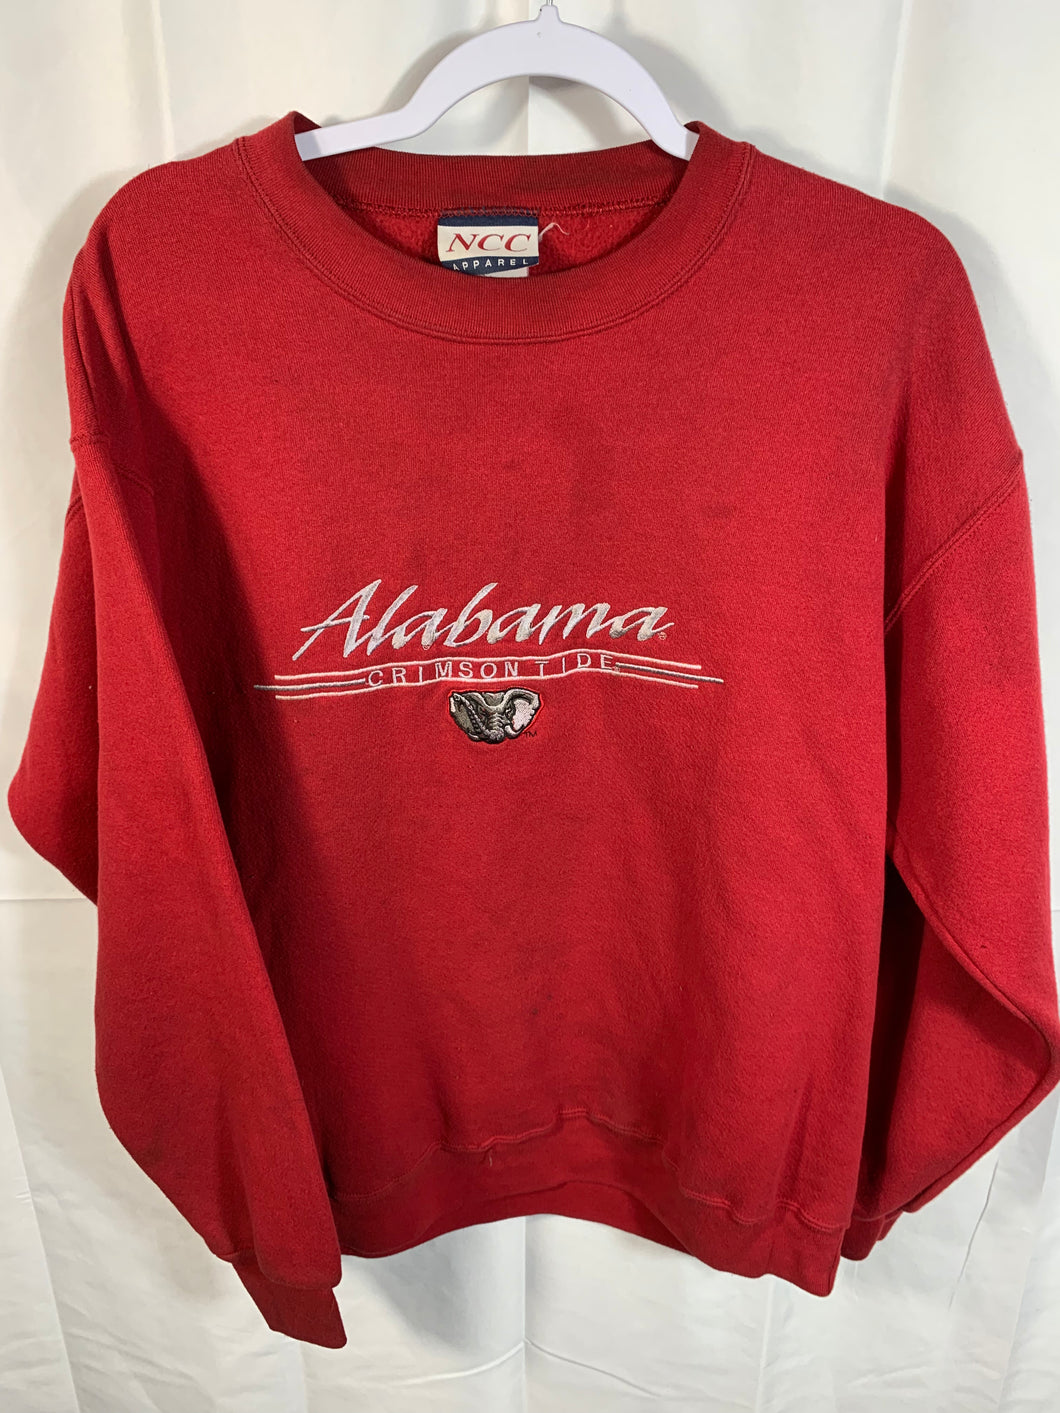 Vintage Alabama Embroidered Crewneck Sweatshirt XL